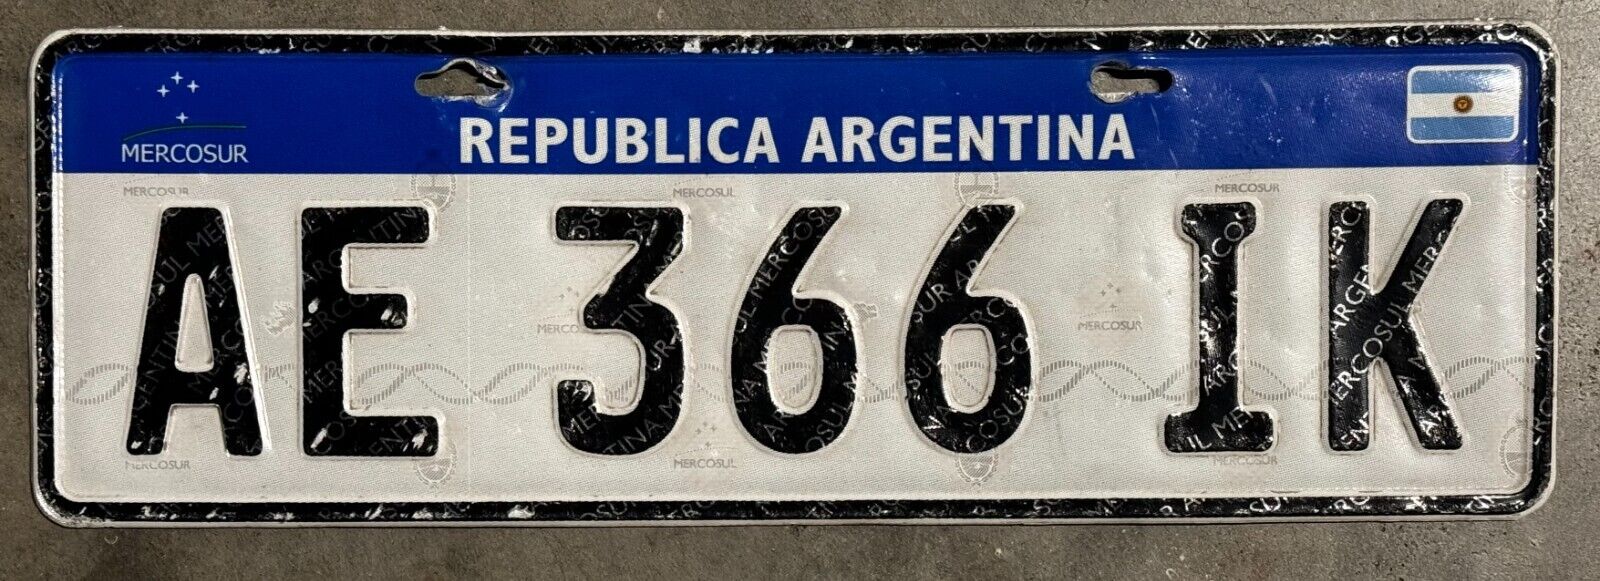 2020 Single Argentina CAR License Plate MERCOSUR - AE 366 IK - ROADKILL